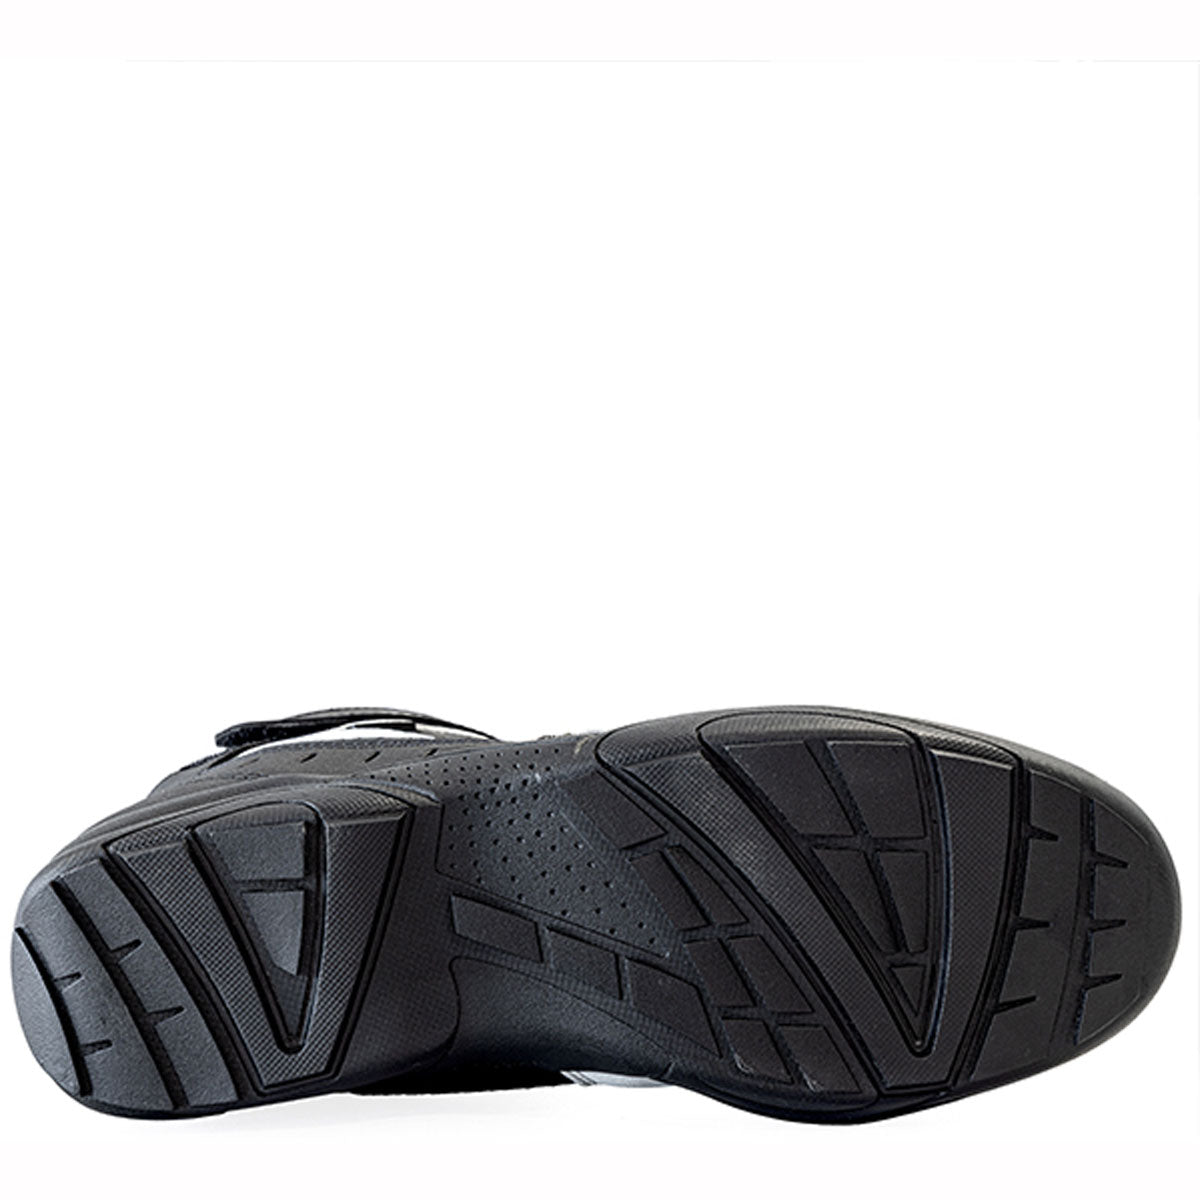 Richa Slick Motorbike Shoes - Black White sole